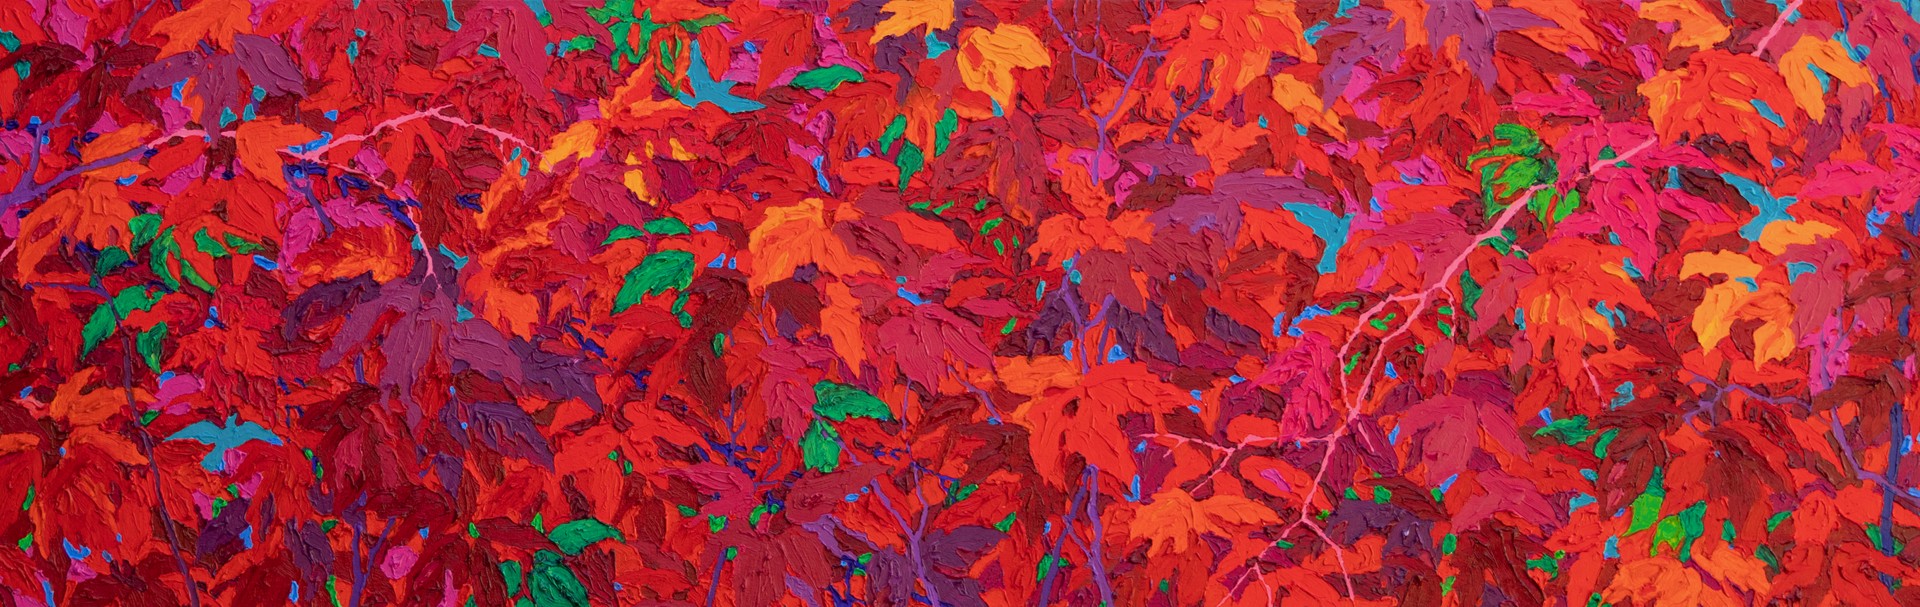 Red Leaves Sky Blue Birds by Frank Balaam